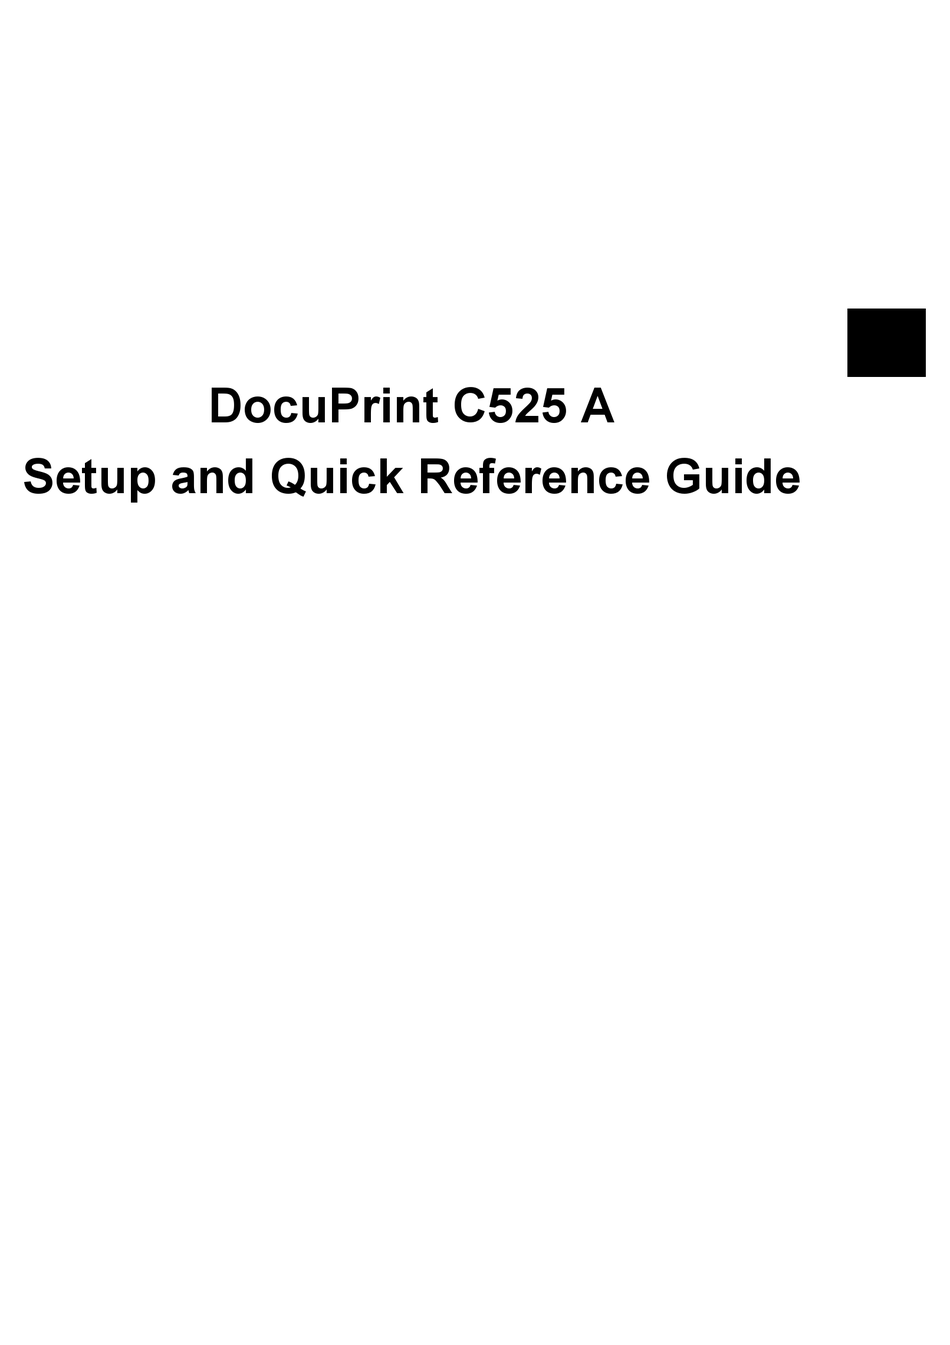 xerox docuprint c525 service manual pdf